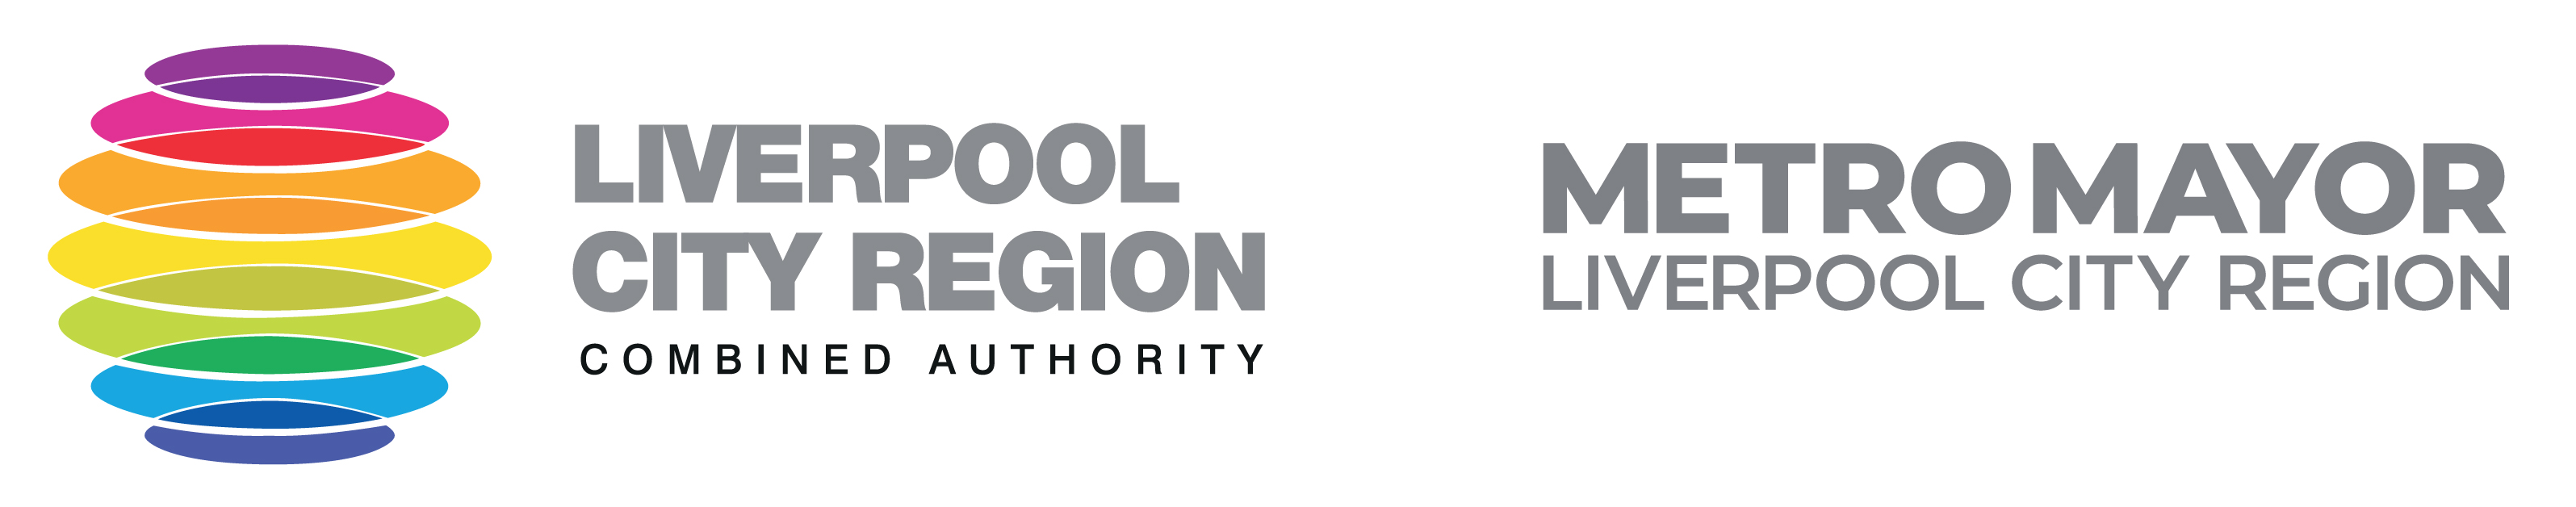 liverpool city region combined authority logo